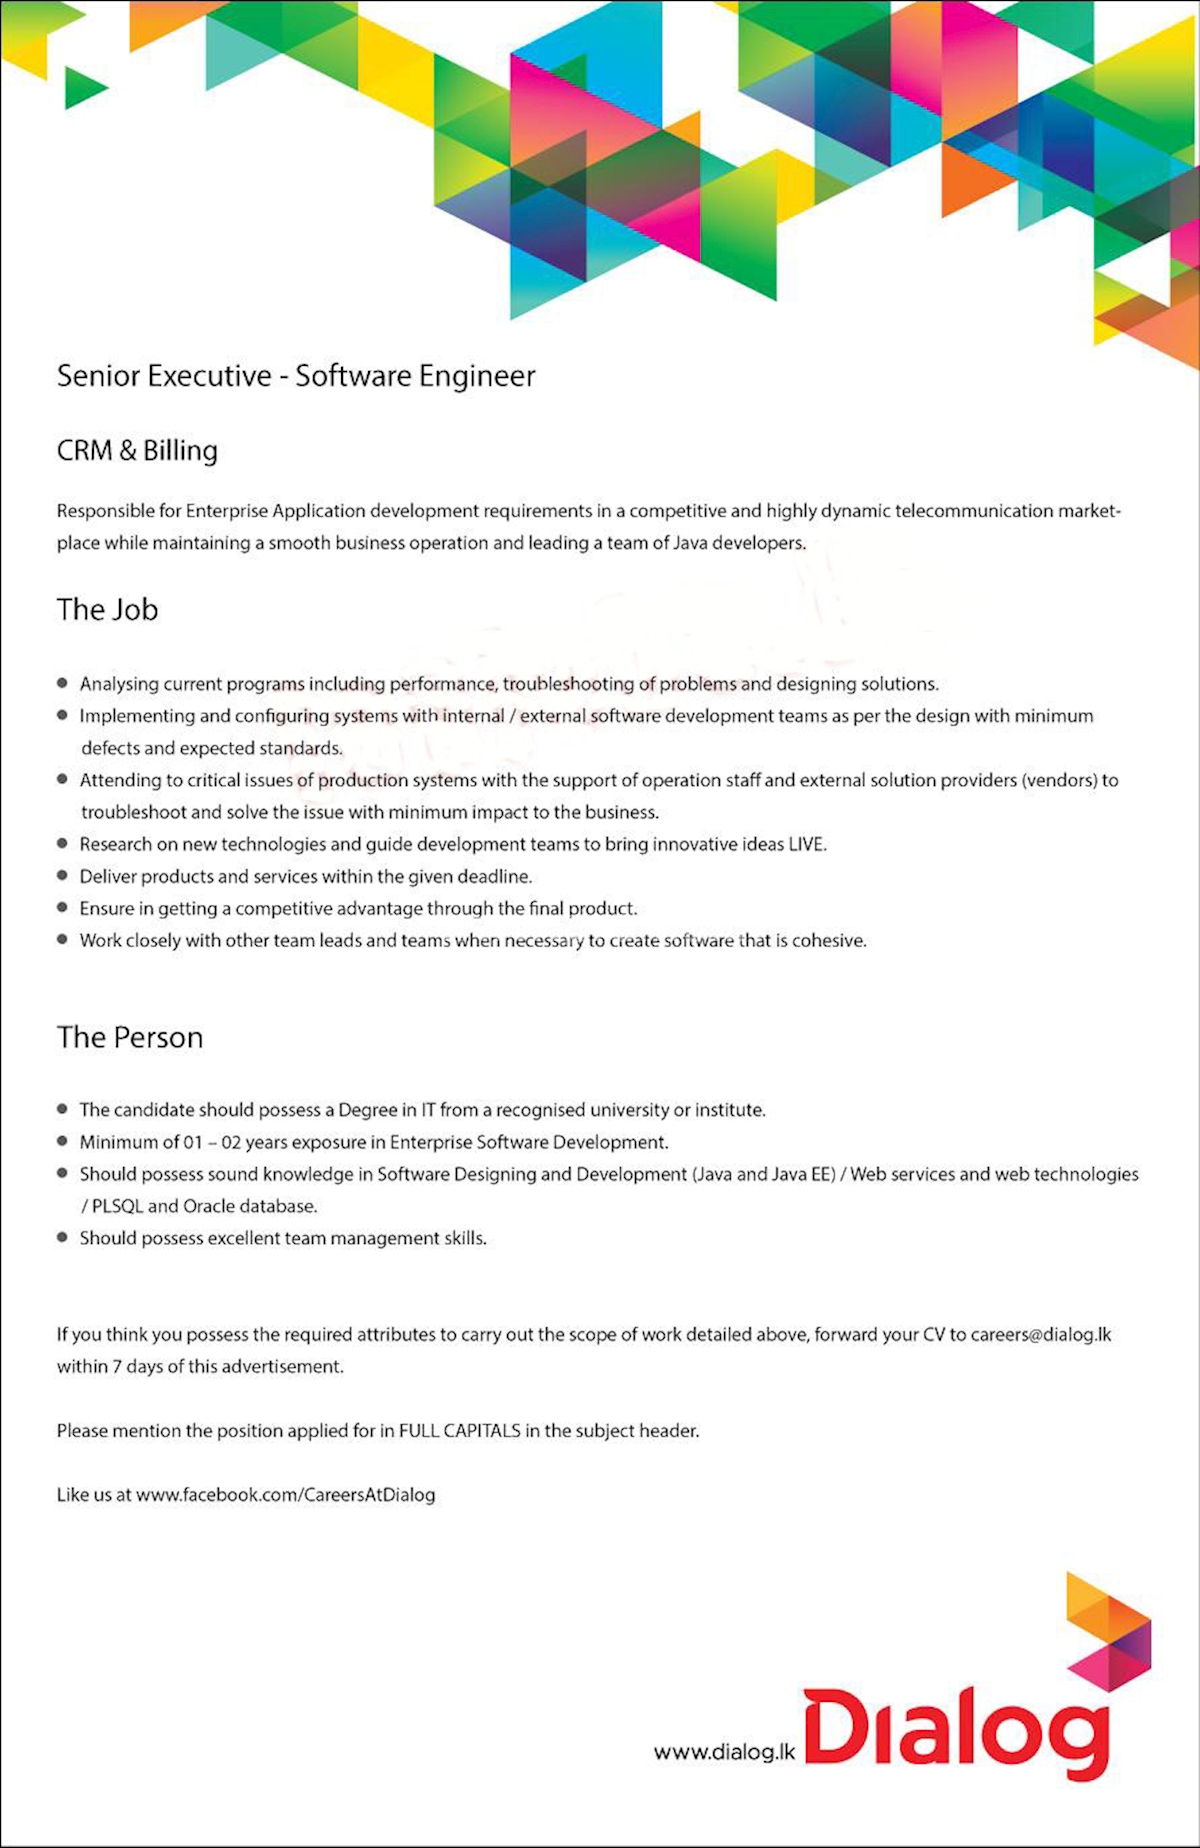 Senior Executive - Software Engineer